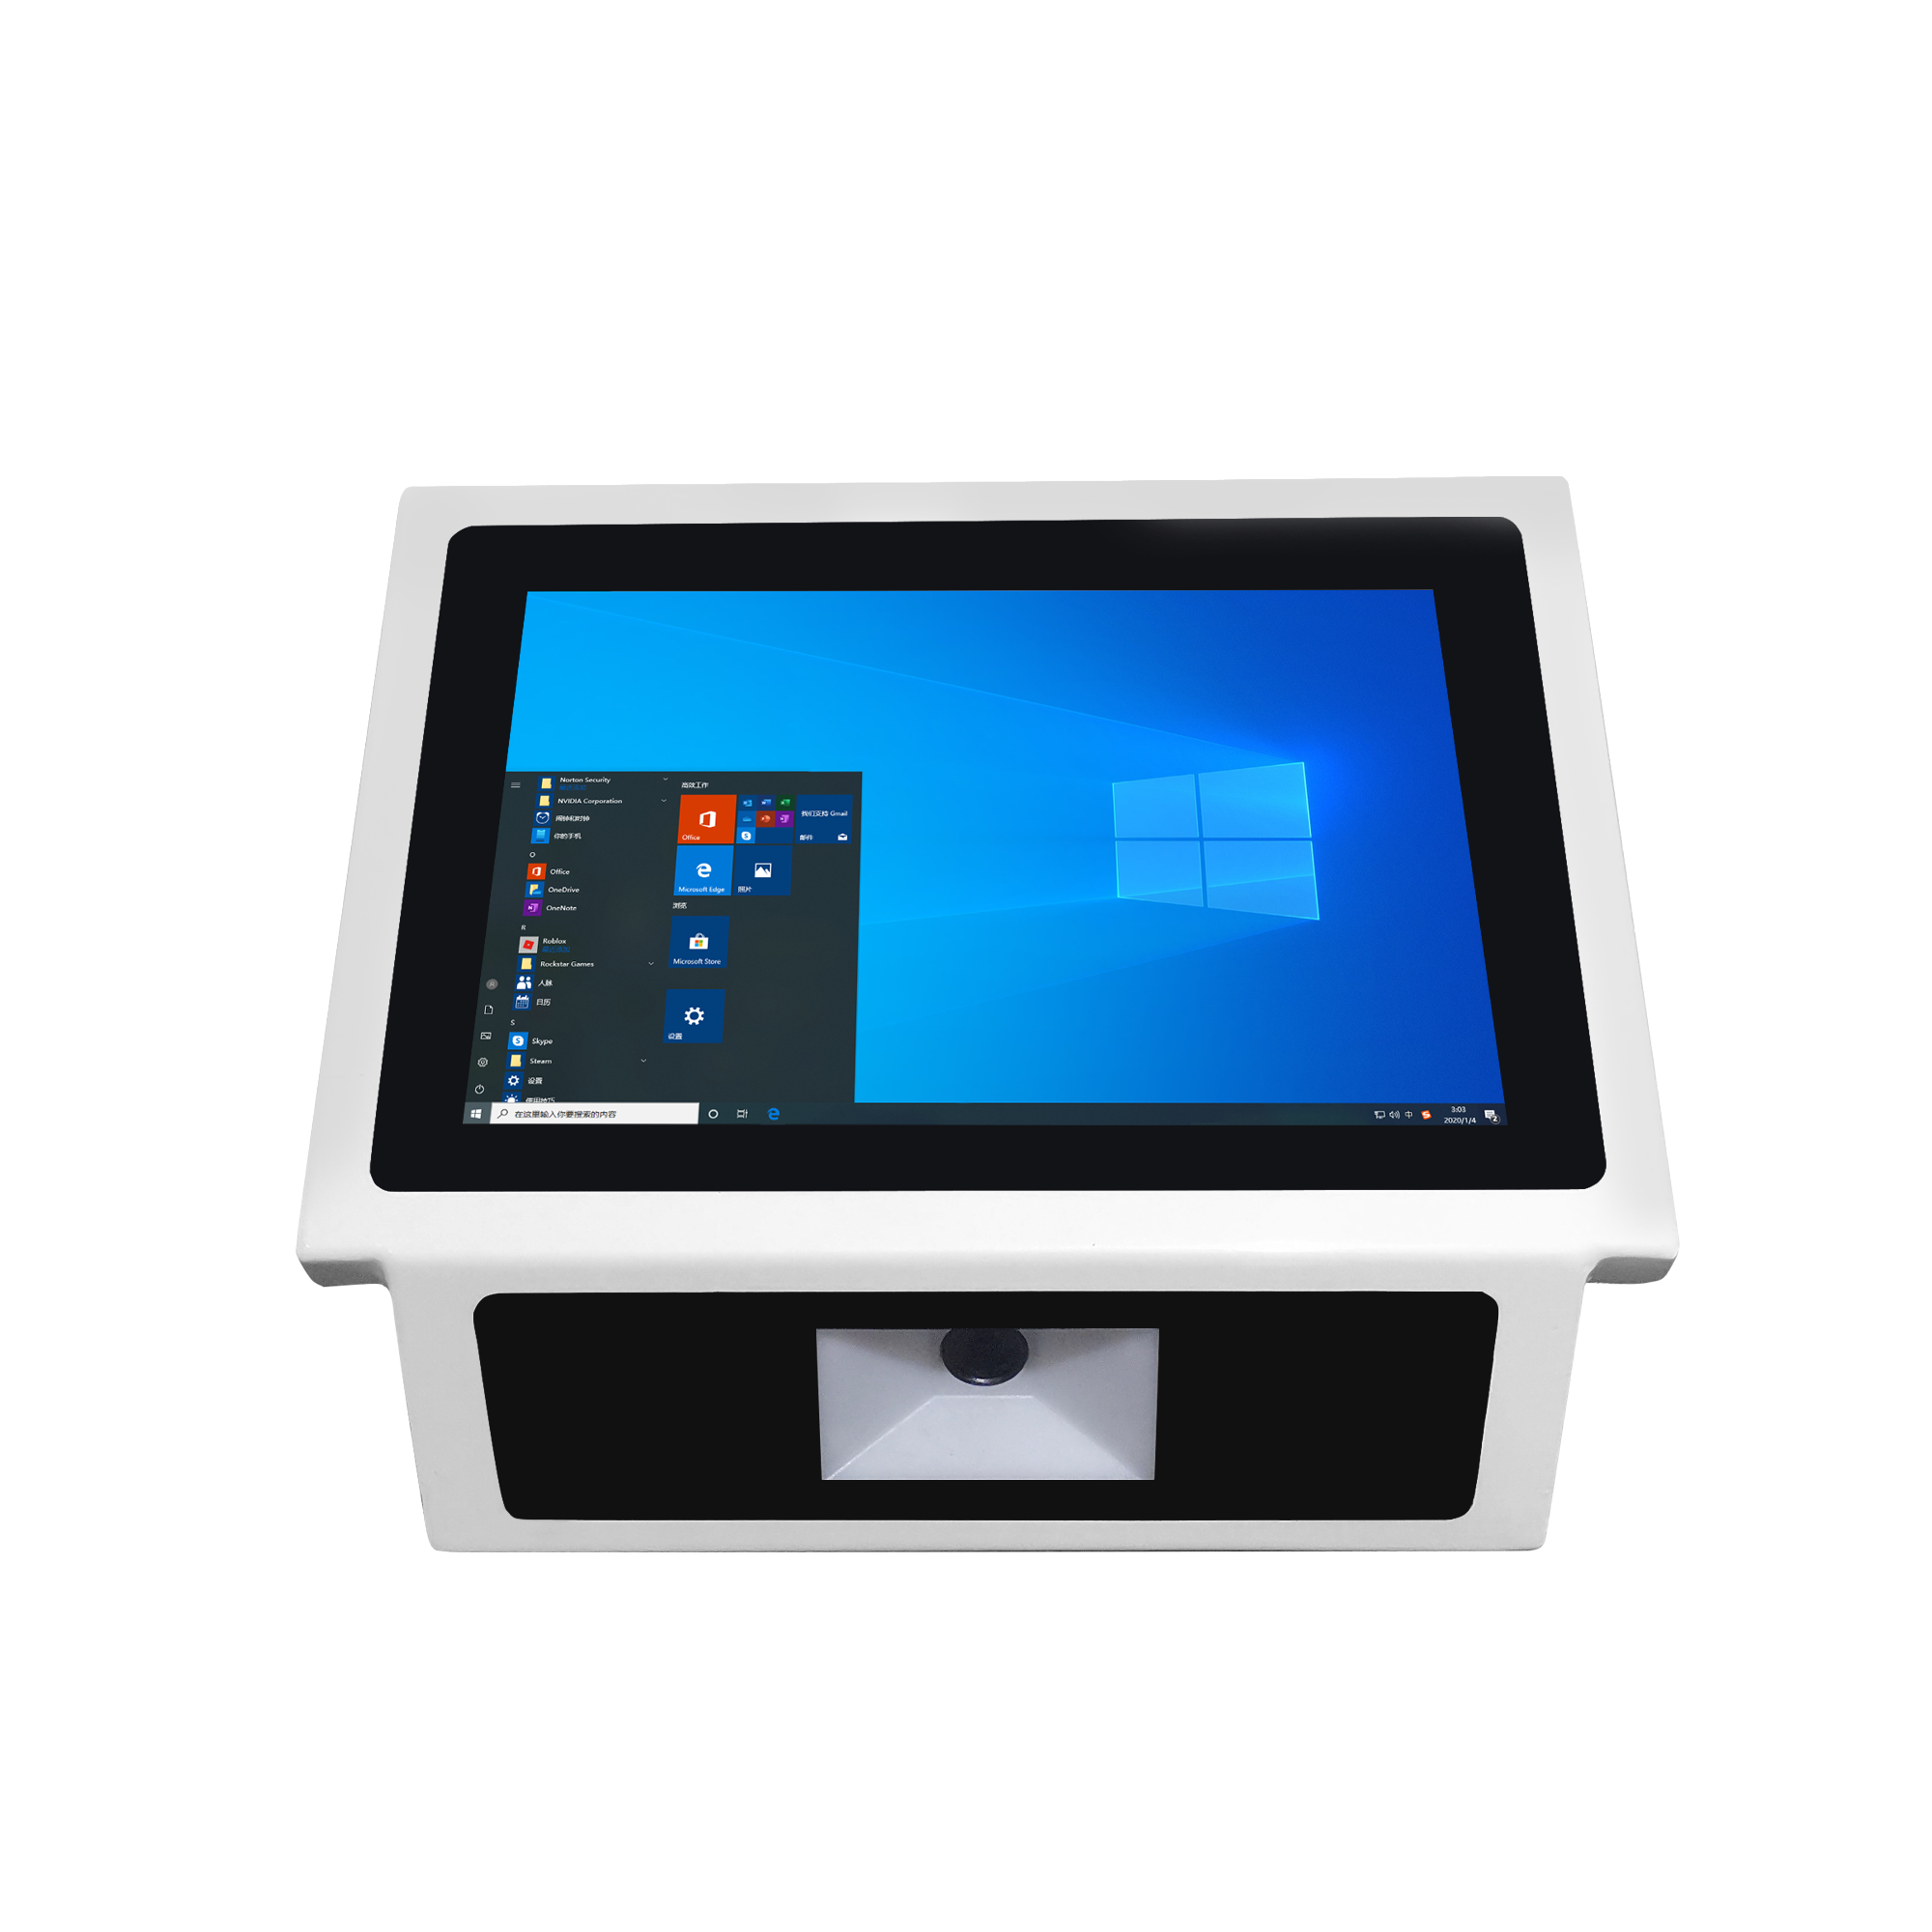 I-Winson Windows Scan Kiosk Price Checker Touch Screen